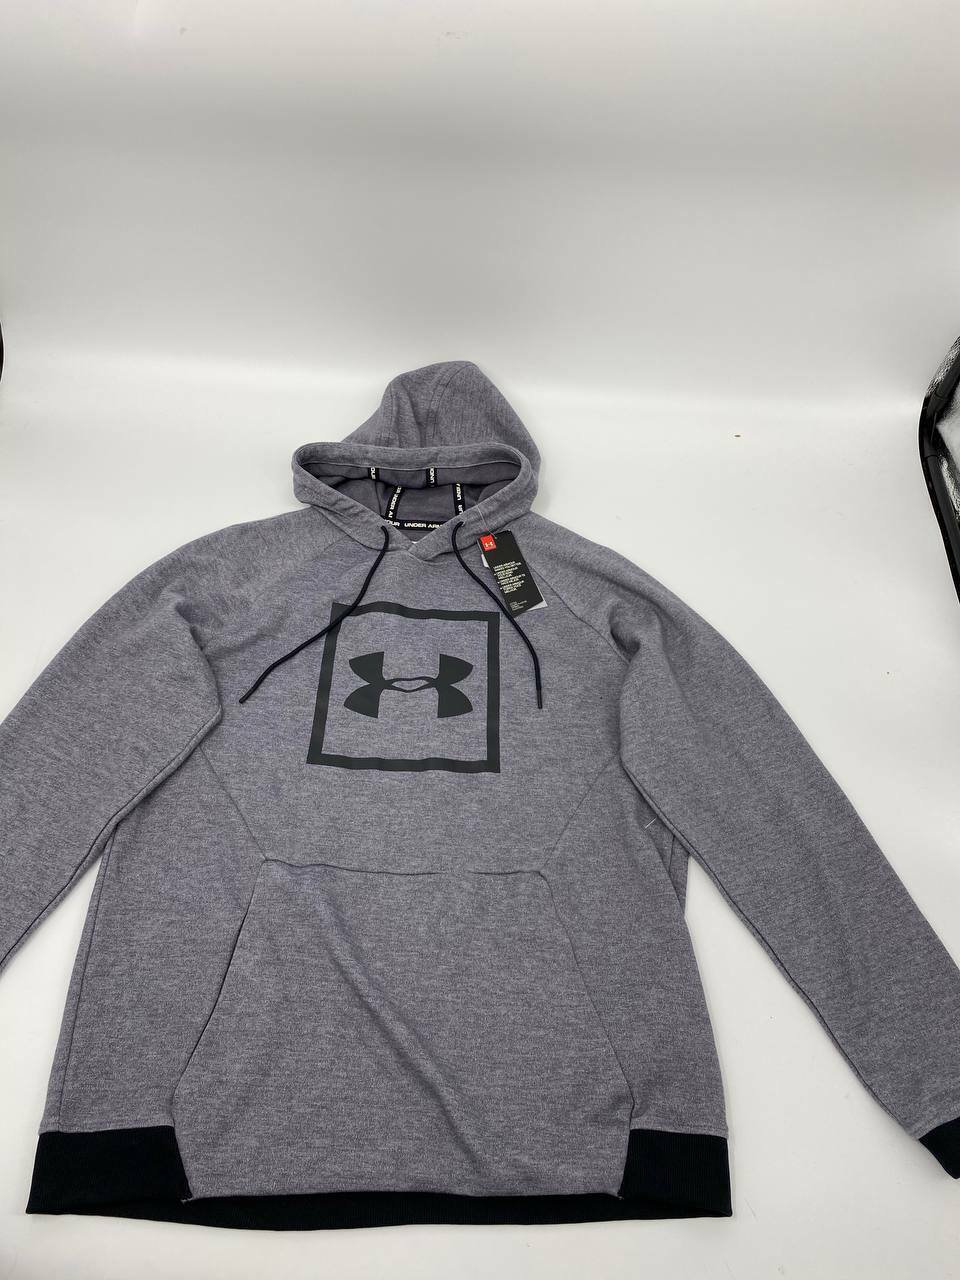 New Under Armour mens hooded sweatshirt pullover Sz XL gray Cotton V331 V551